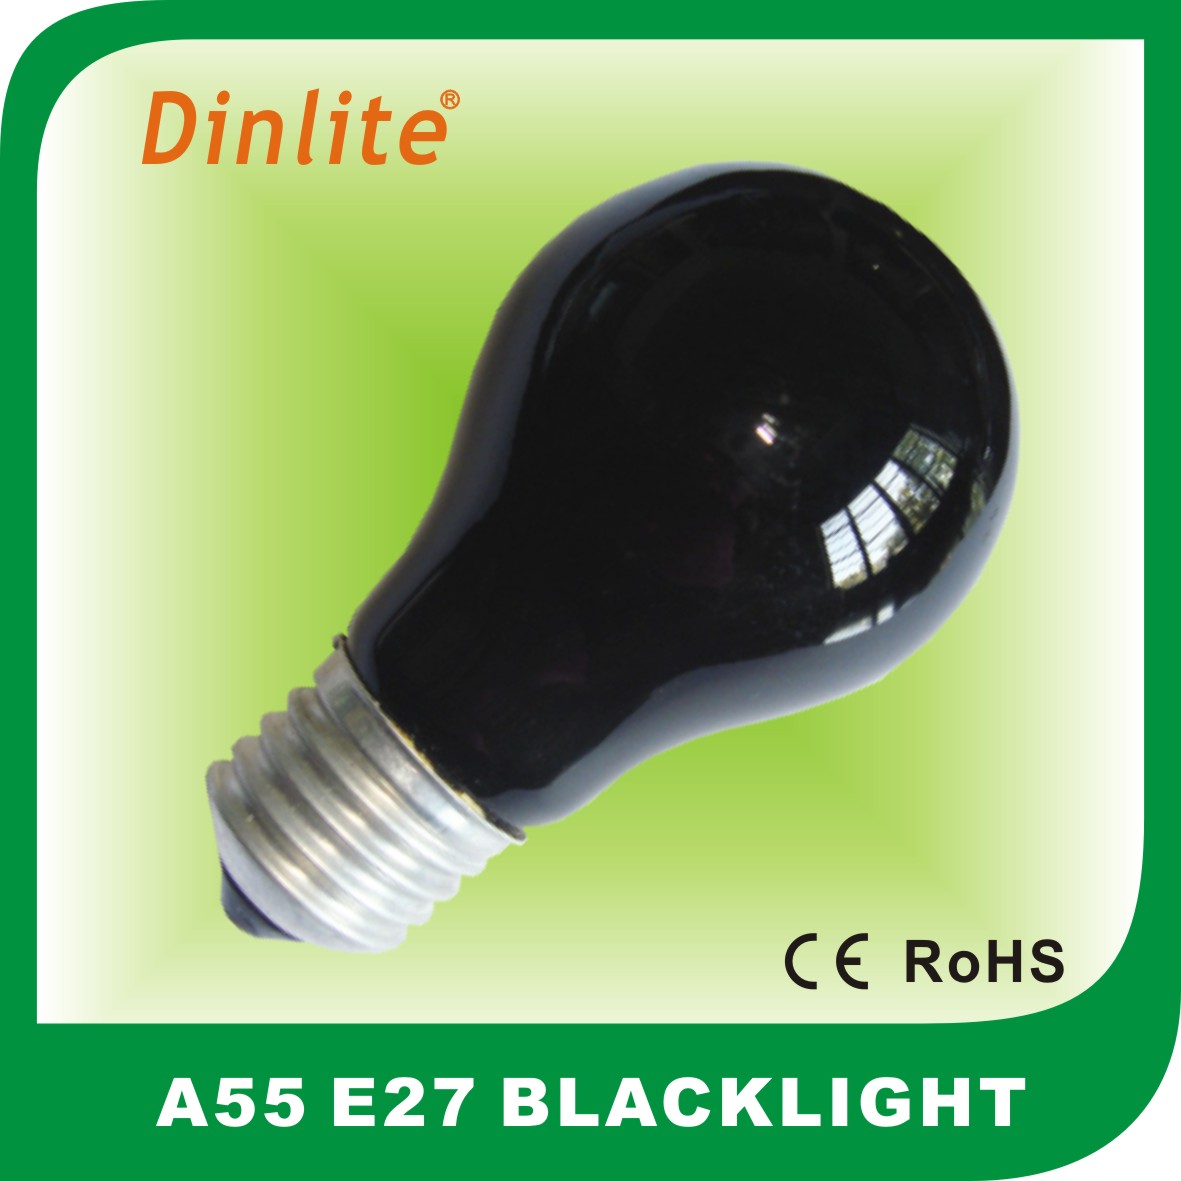 A55 Blacklight Incandesent Bulb Decorative Lamp Manufacturers